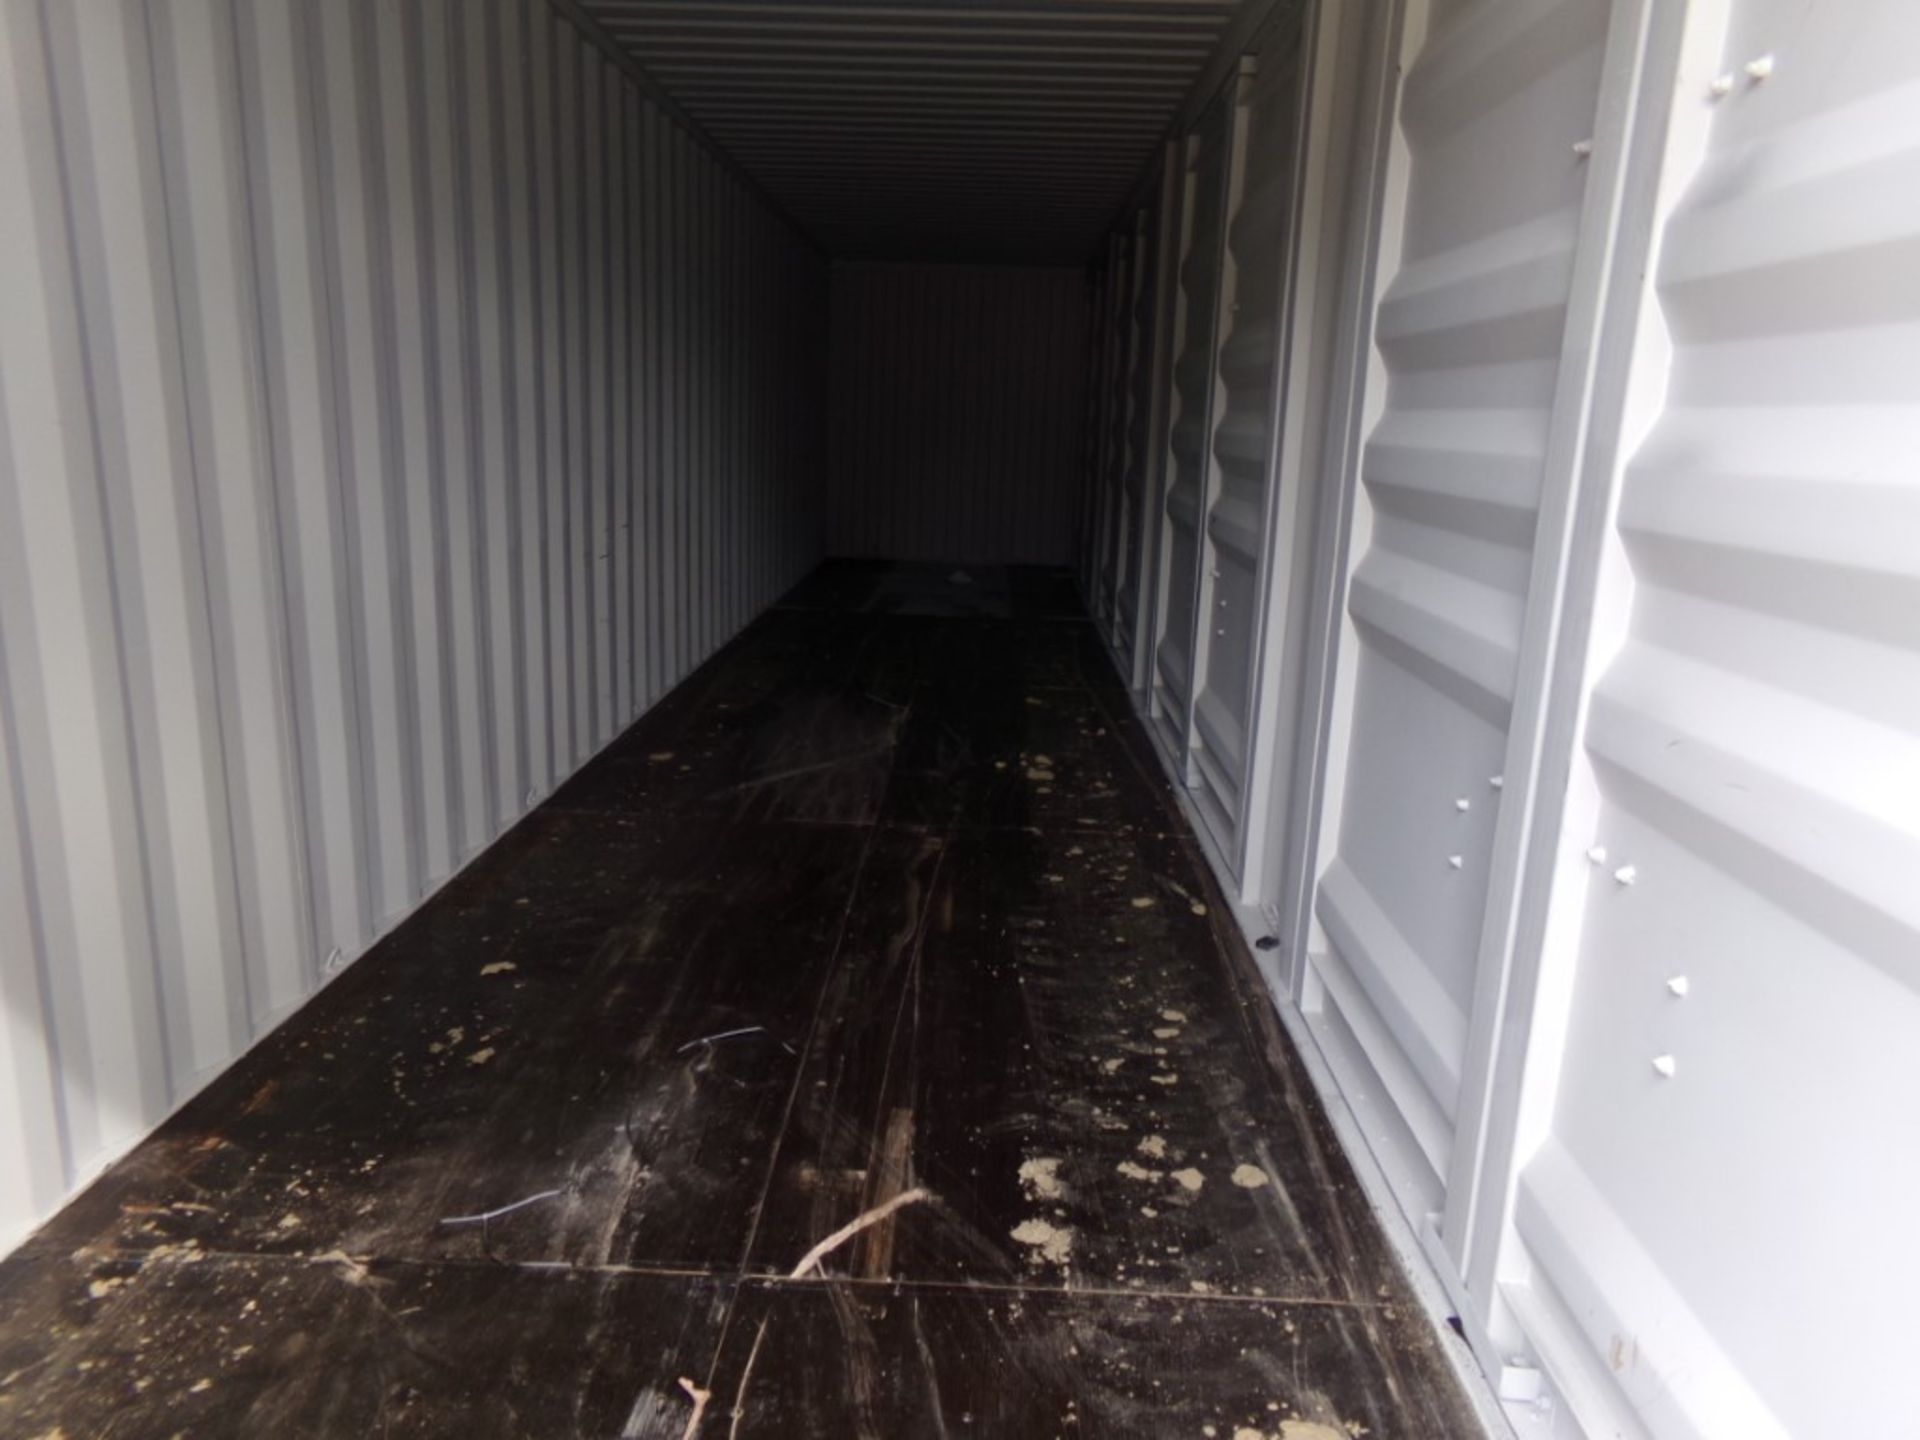 New 40' Off White Storage Container with Barn Doors in 1 End, Cont. # LYGU4130134 - Bild 5 aus 5